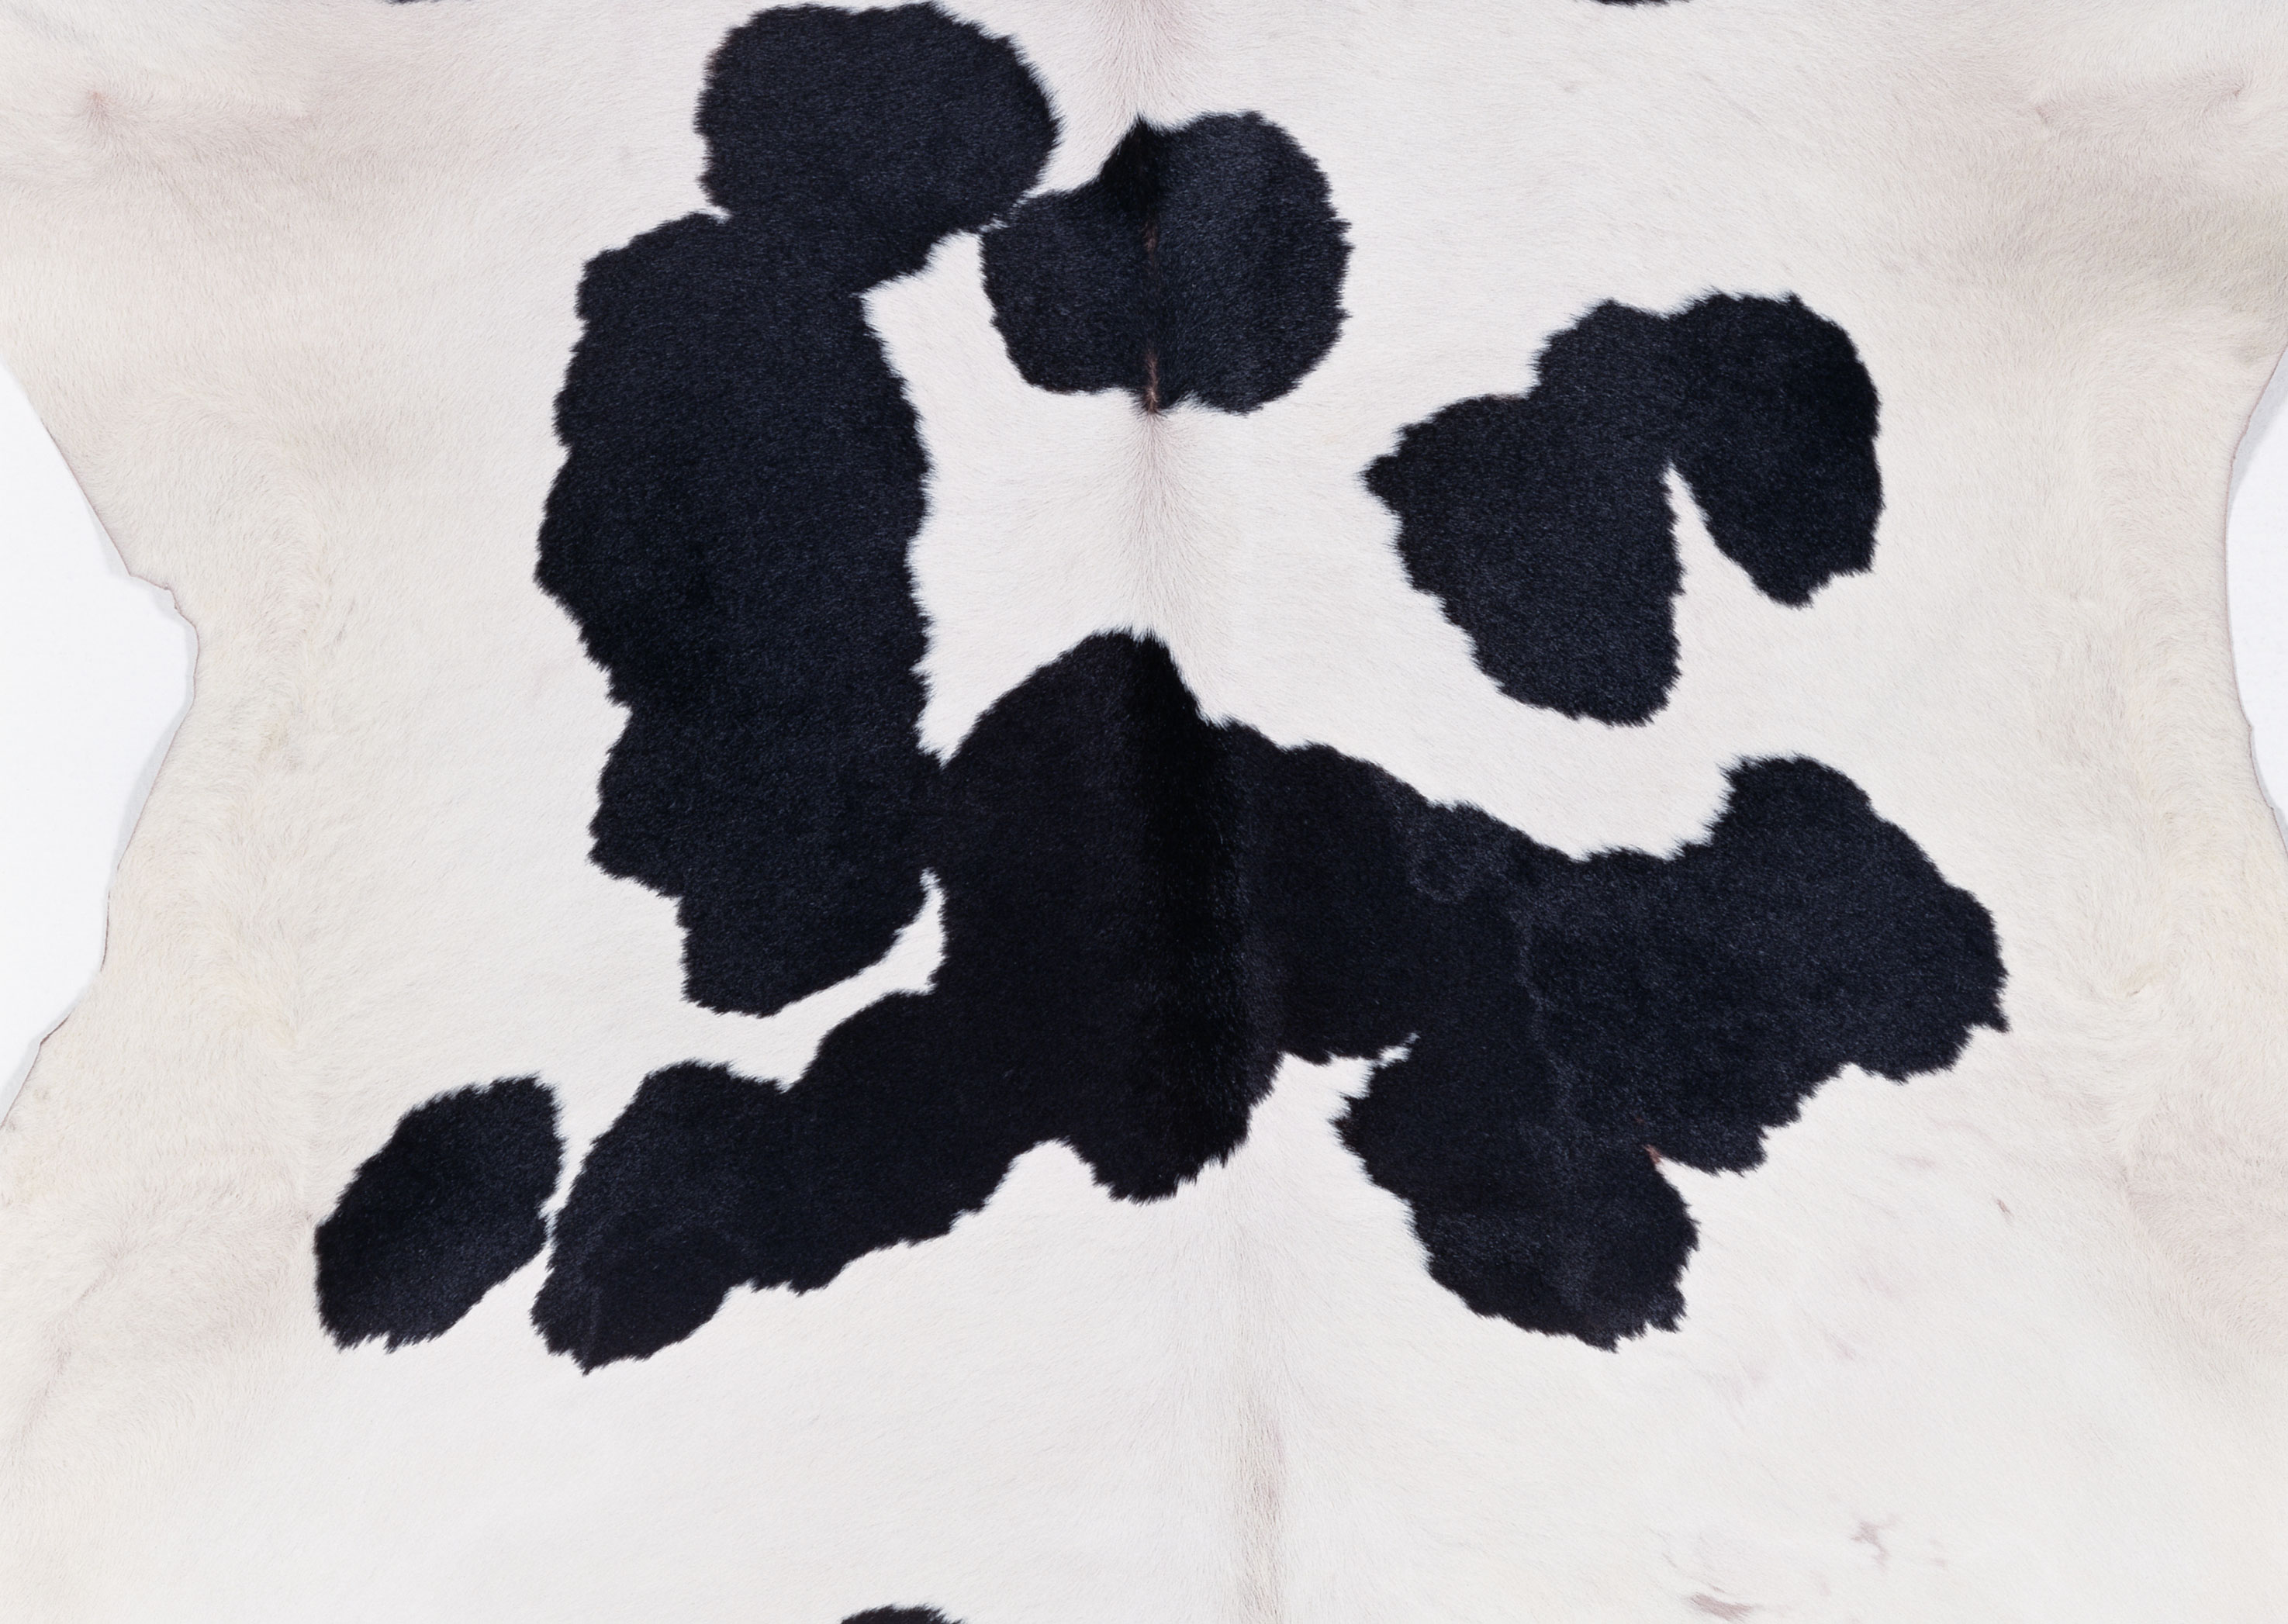 Cow fur texture background image